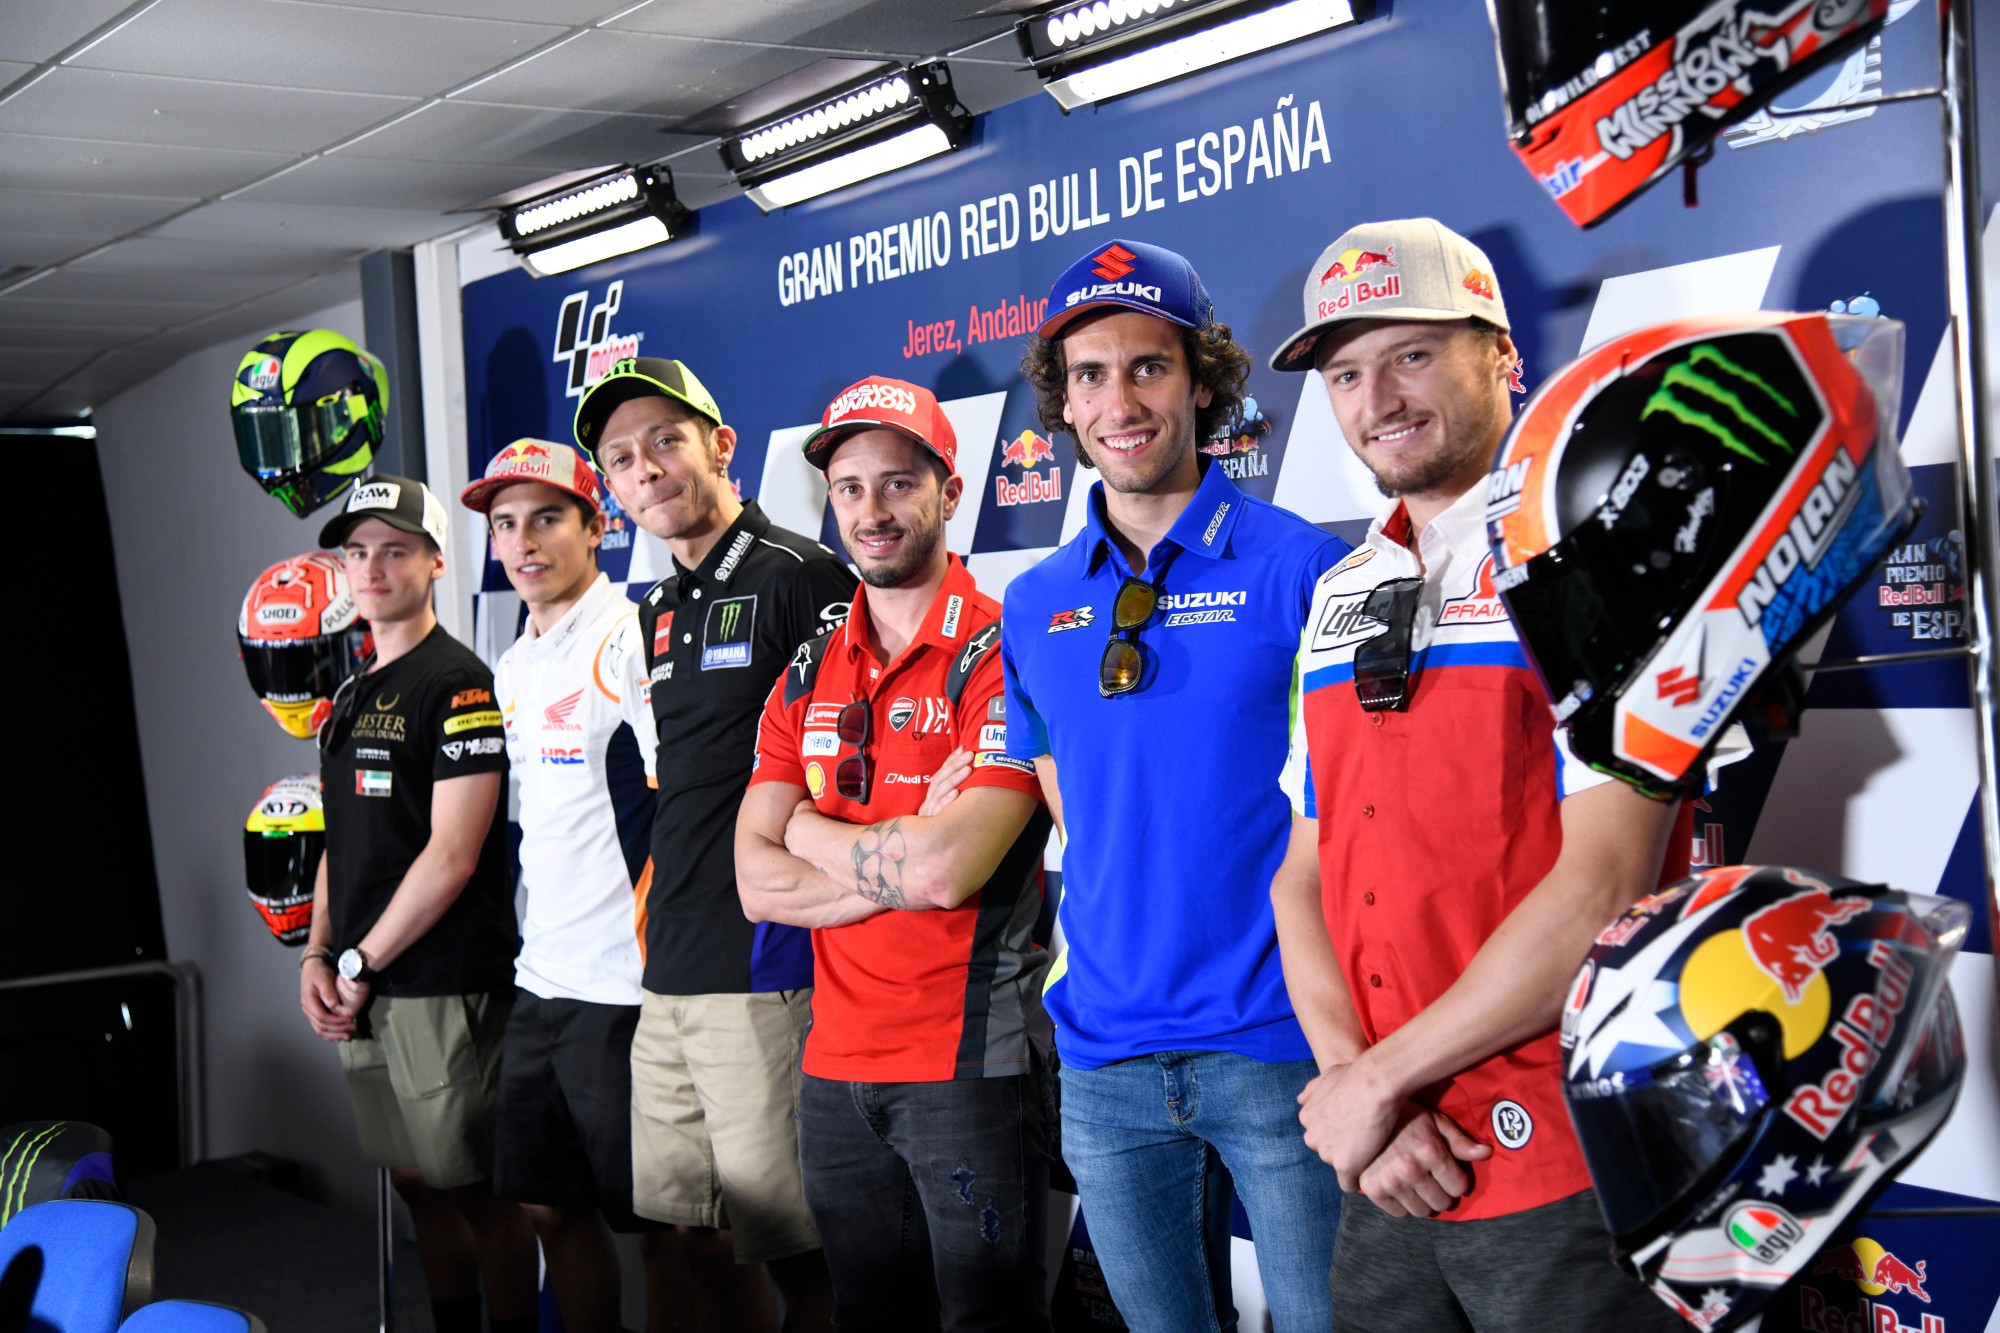 MotoGP: Riders Speak To The Media Ahead Of The Gran Red Bull de España - Roadracing World Magazine | Motorcycle Riding, Racing & Tech News